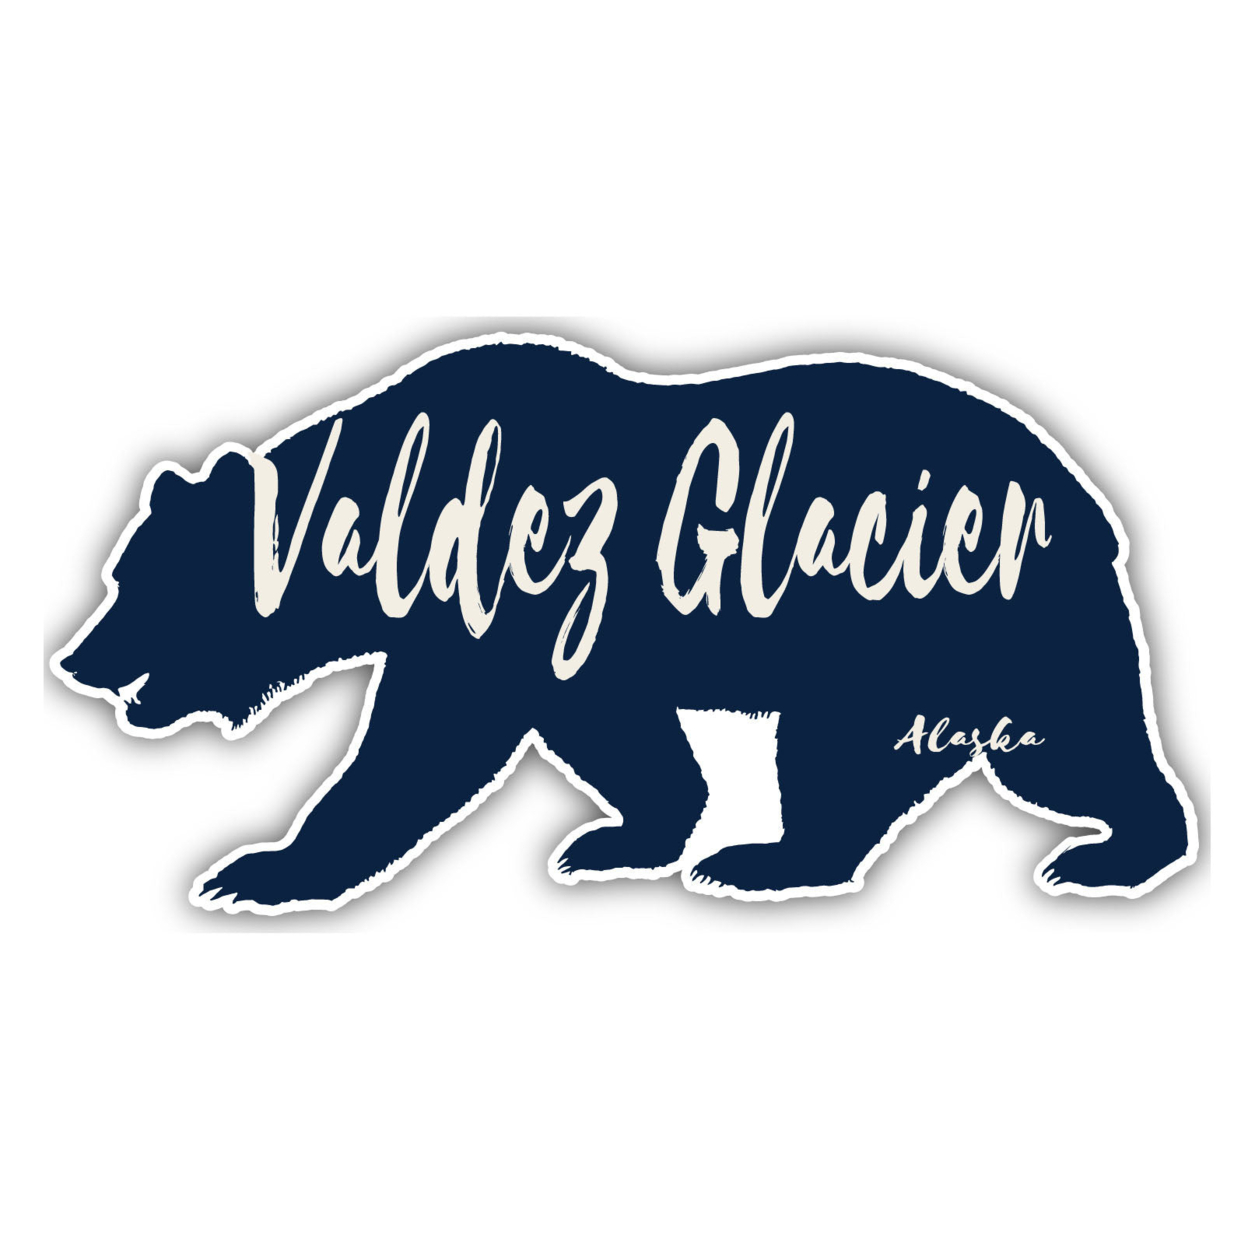 Valdez Glacier Alaska Souvenir Decorative Stickers (Choose Theme And Size) - Single Unit, 2-Inch, Bear